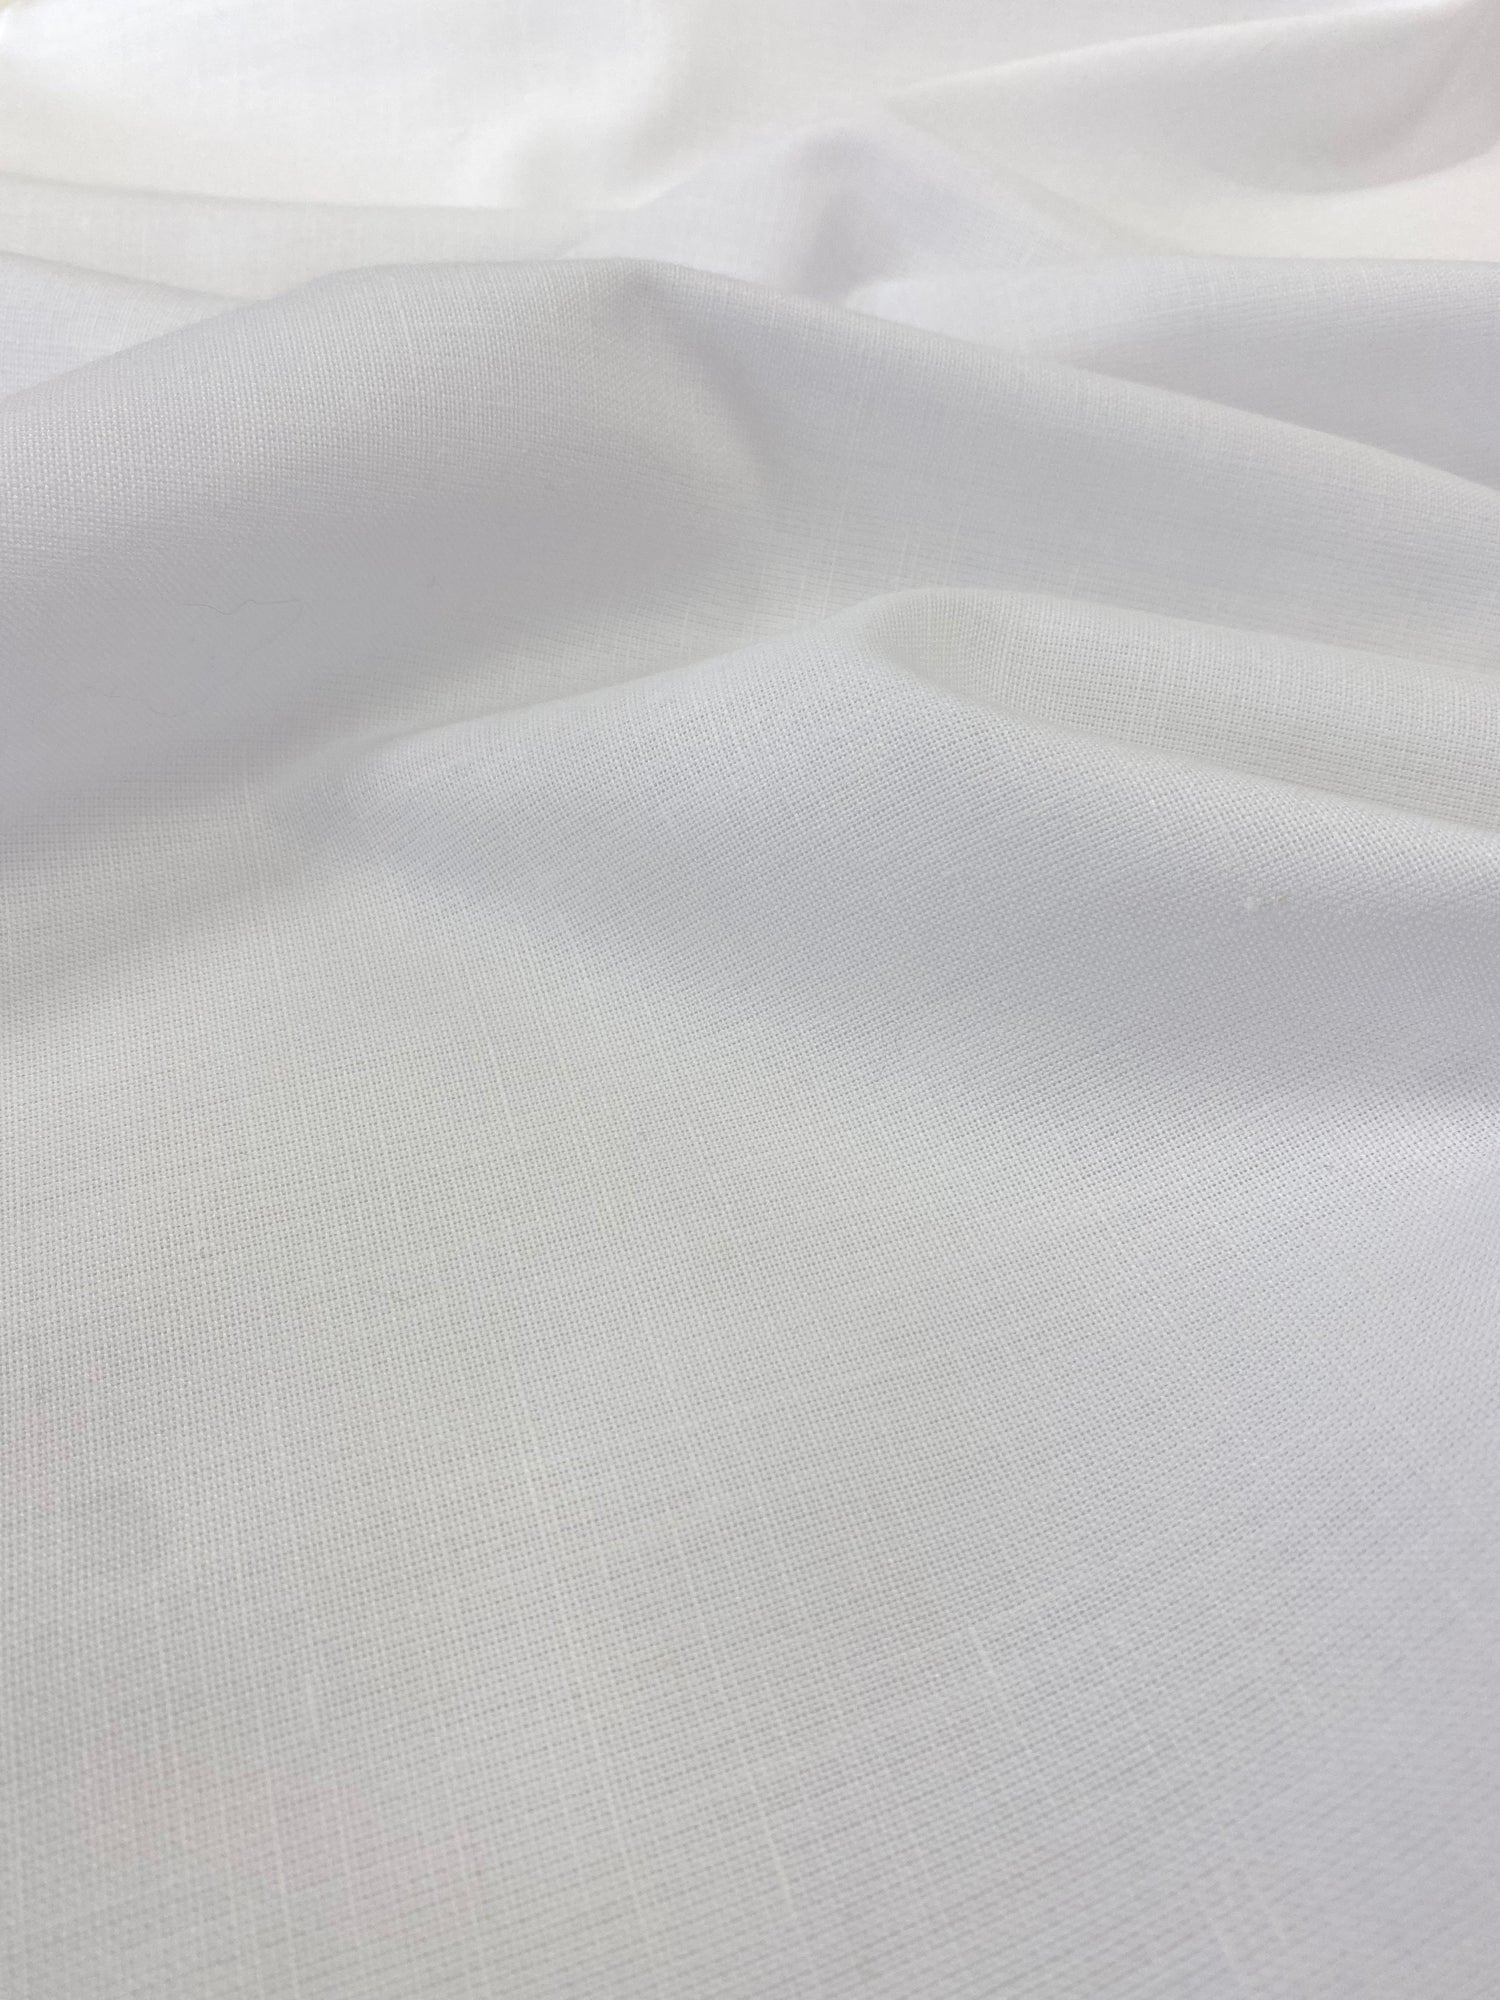 Tessuto per Tende in Lino Bianco + 21